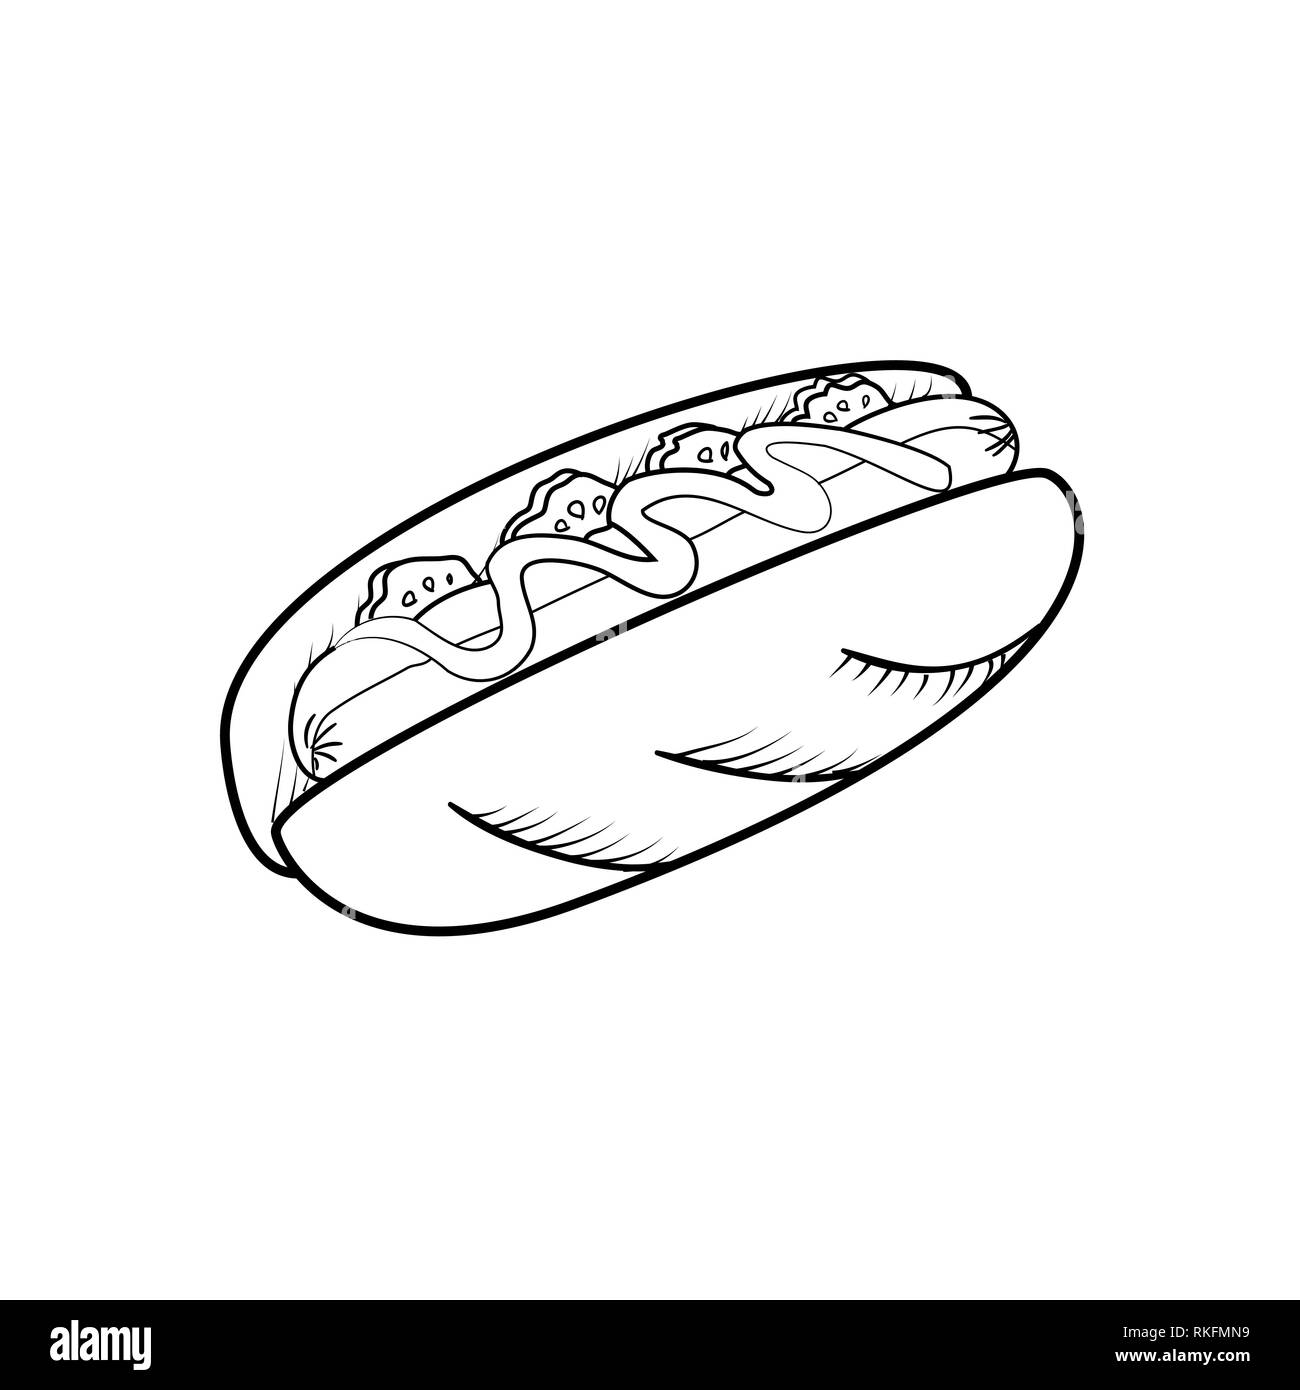 Hot dog hand drawn illustration. Fast food design elements, sketch of hotdog with sauce Stock Vector